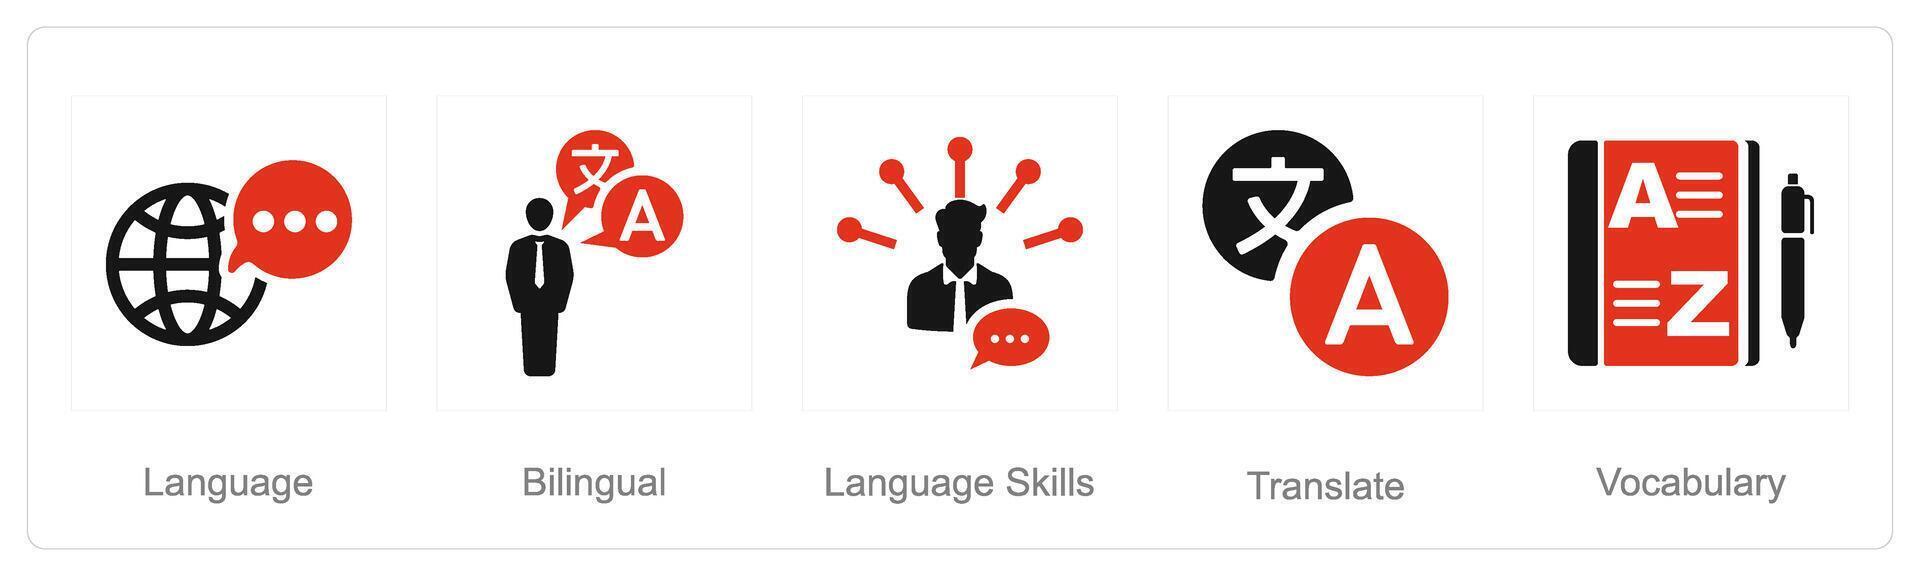 A set of 5 Language icons as language, bilingual, language skills vector